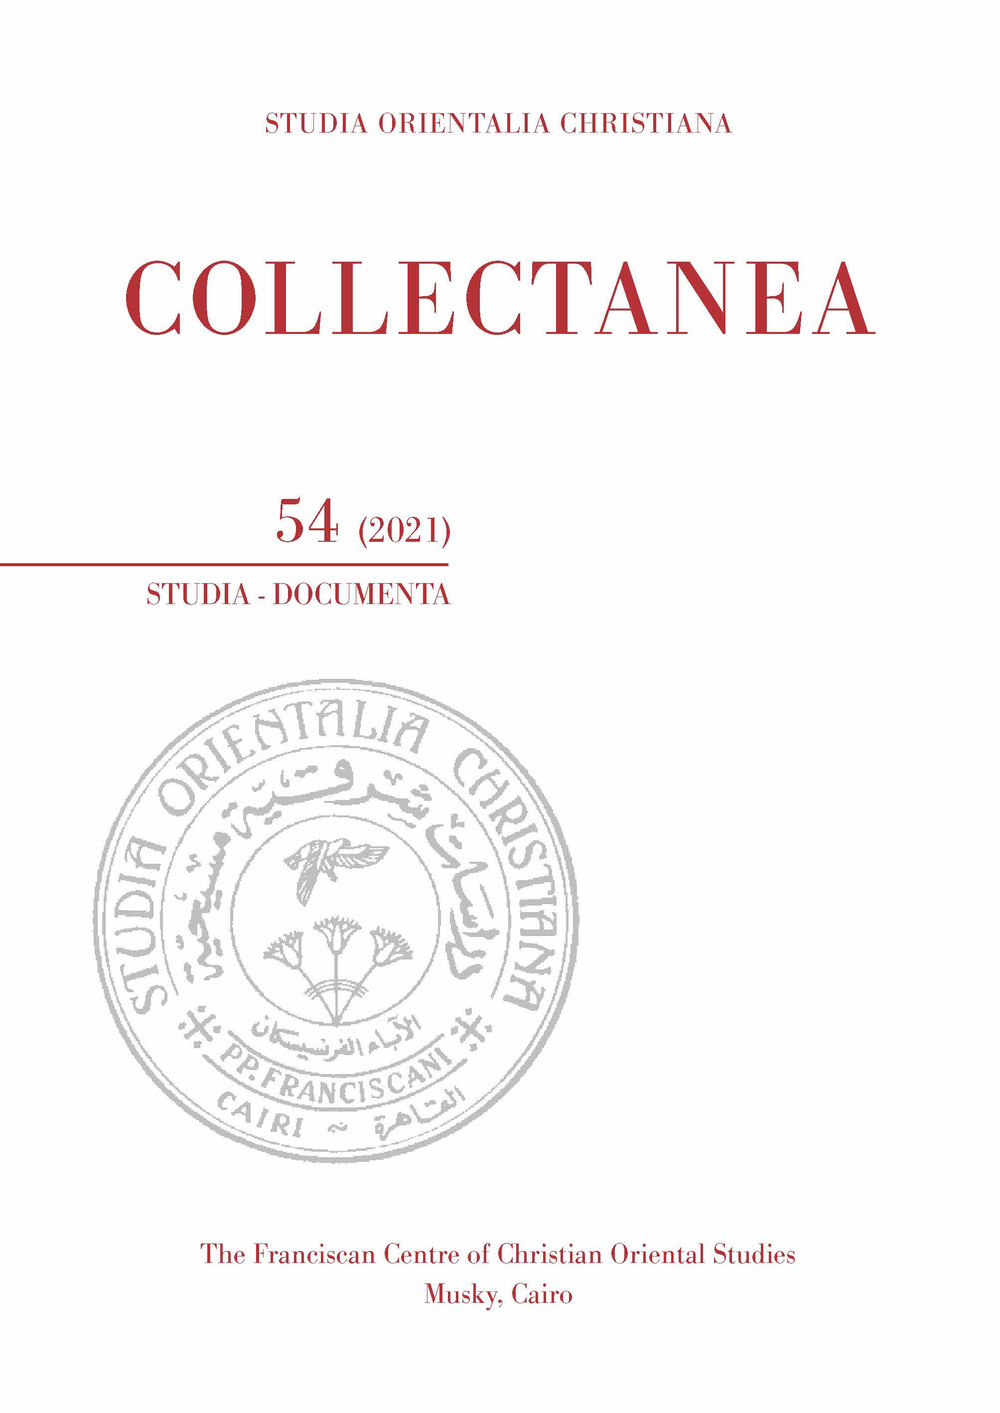 Studia orientalia christiana. Collectanea. Studia, documenta. Ediz. multilingue (2021). Vol. 54